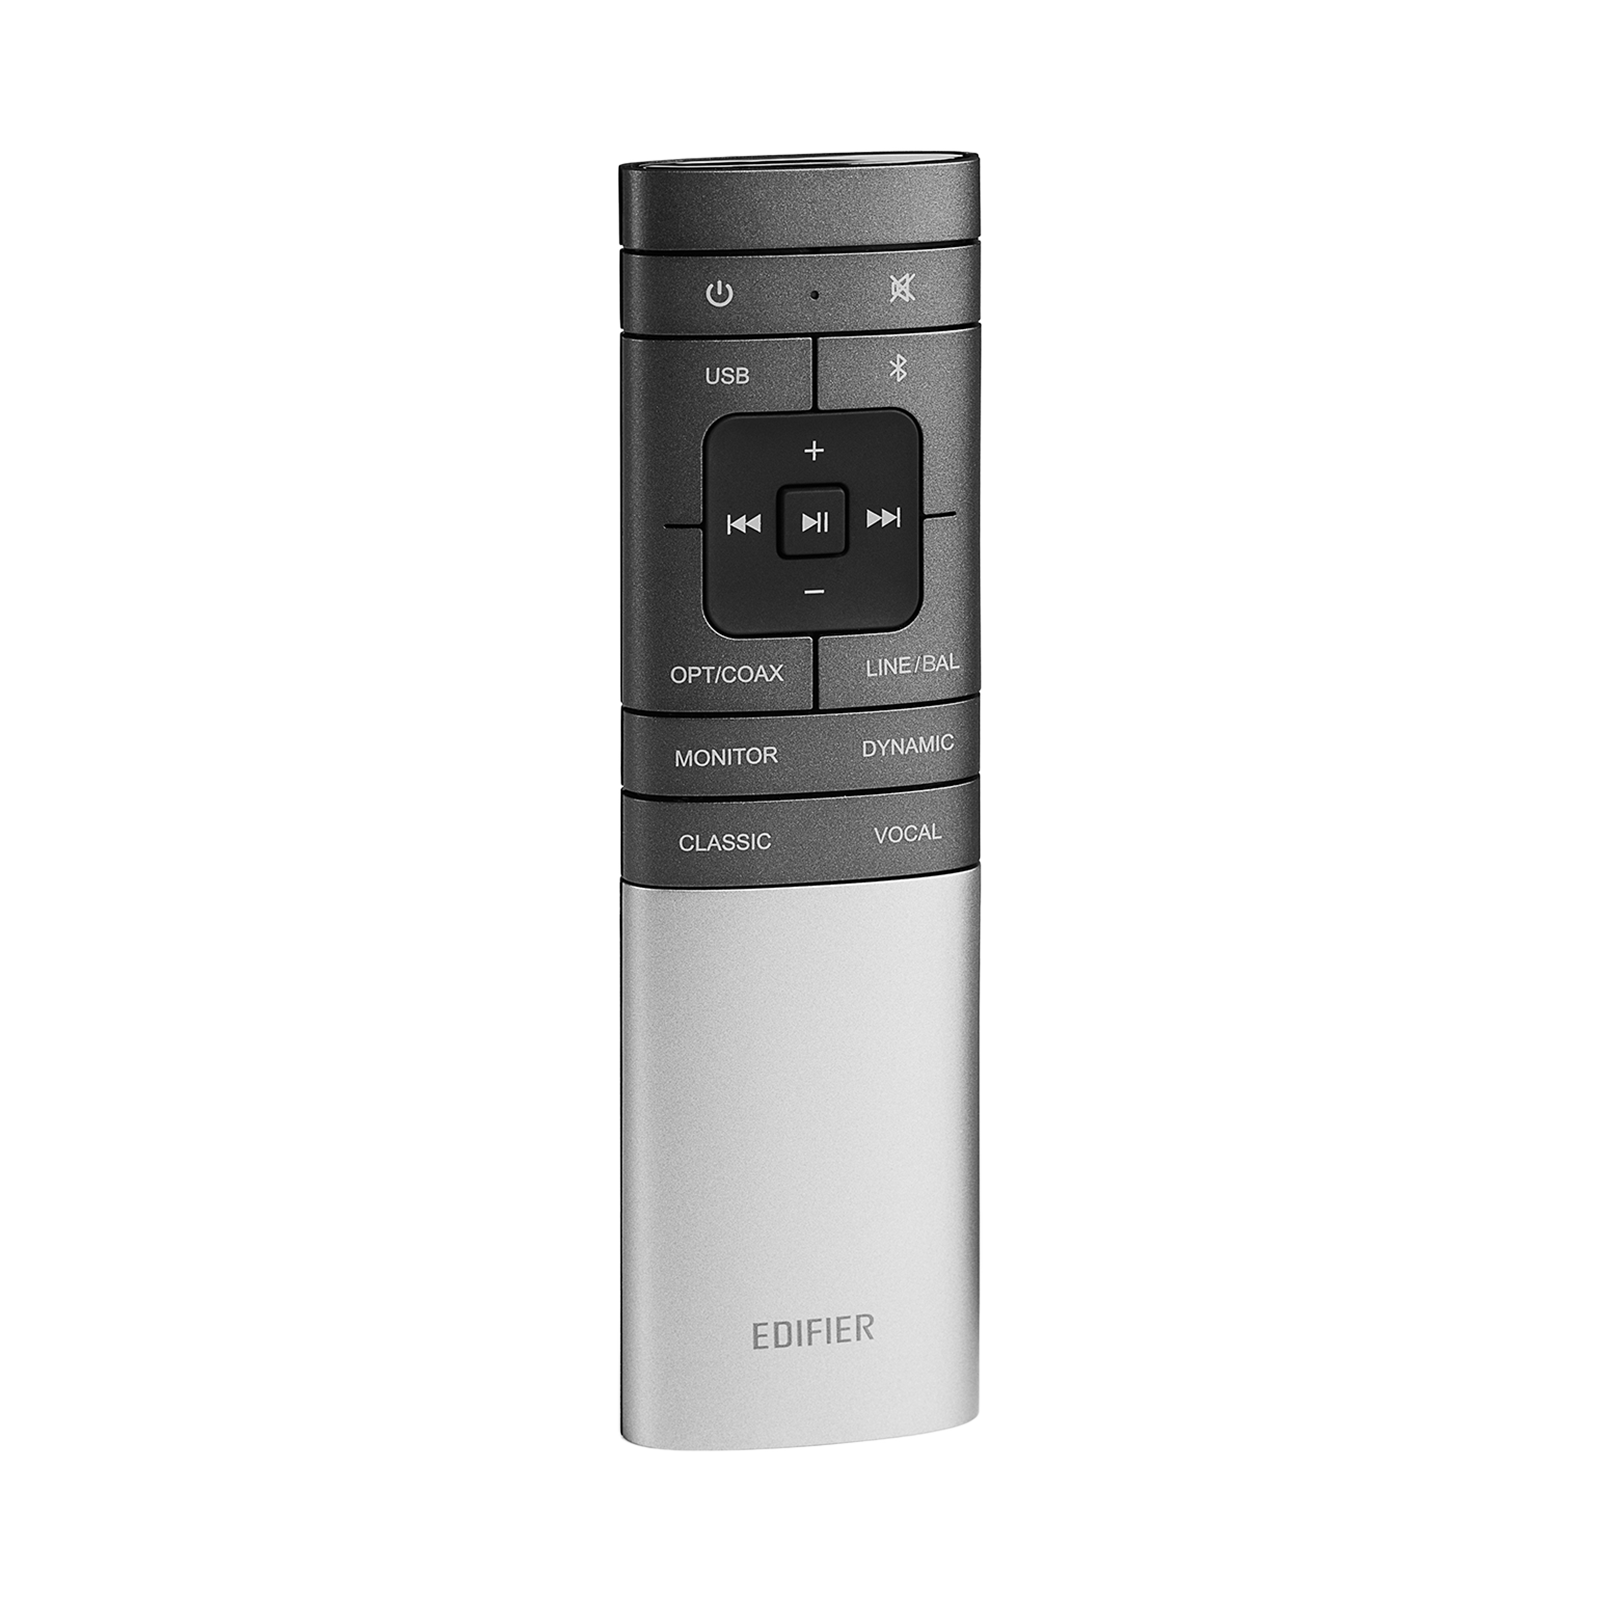 Remote RCA10B-S3000Pro Take full advantage of the S3000Pro wireless bookshelf speakers